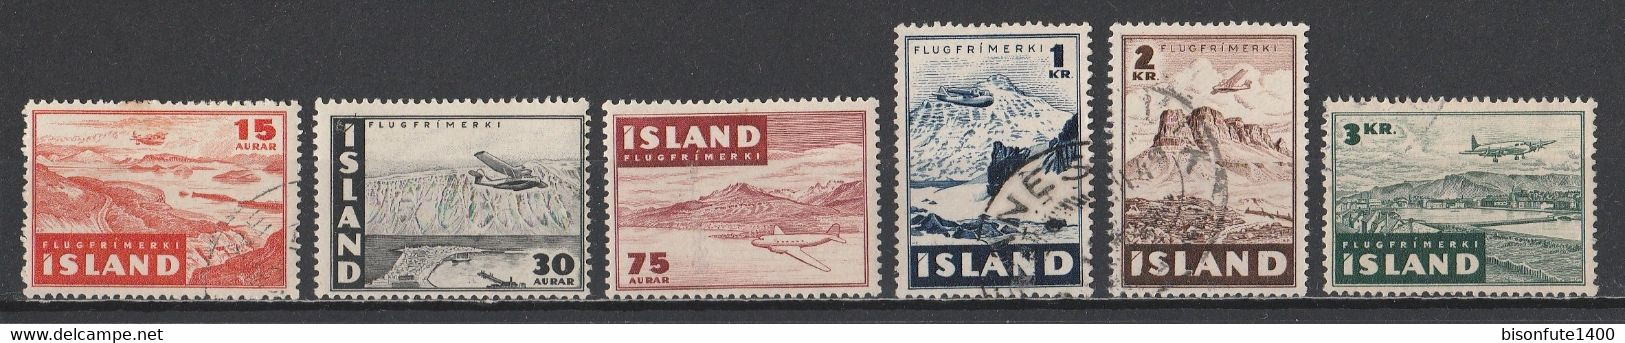 Islande Aérien 1947 : Timbres Yvert & Tellier N° 21 - 22 - 23 - 24 - 25 Et 26 Oblitérés. - Luchtpost